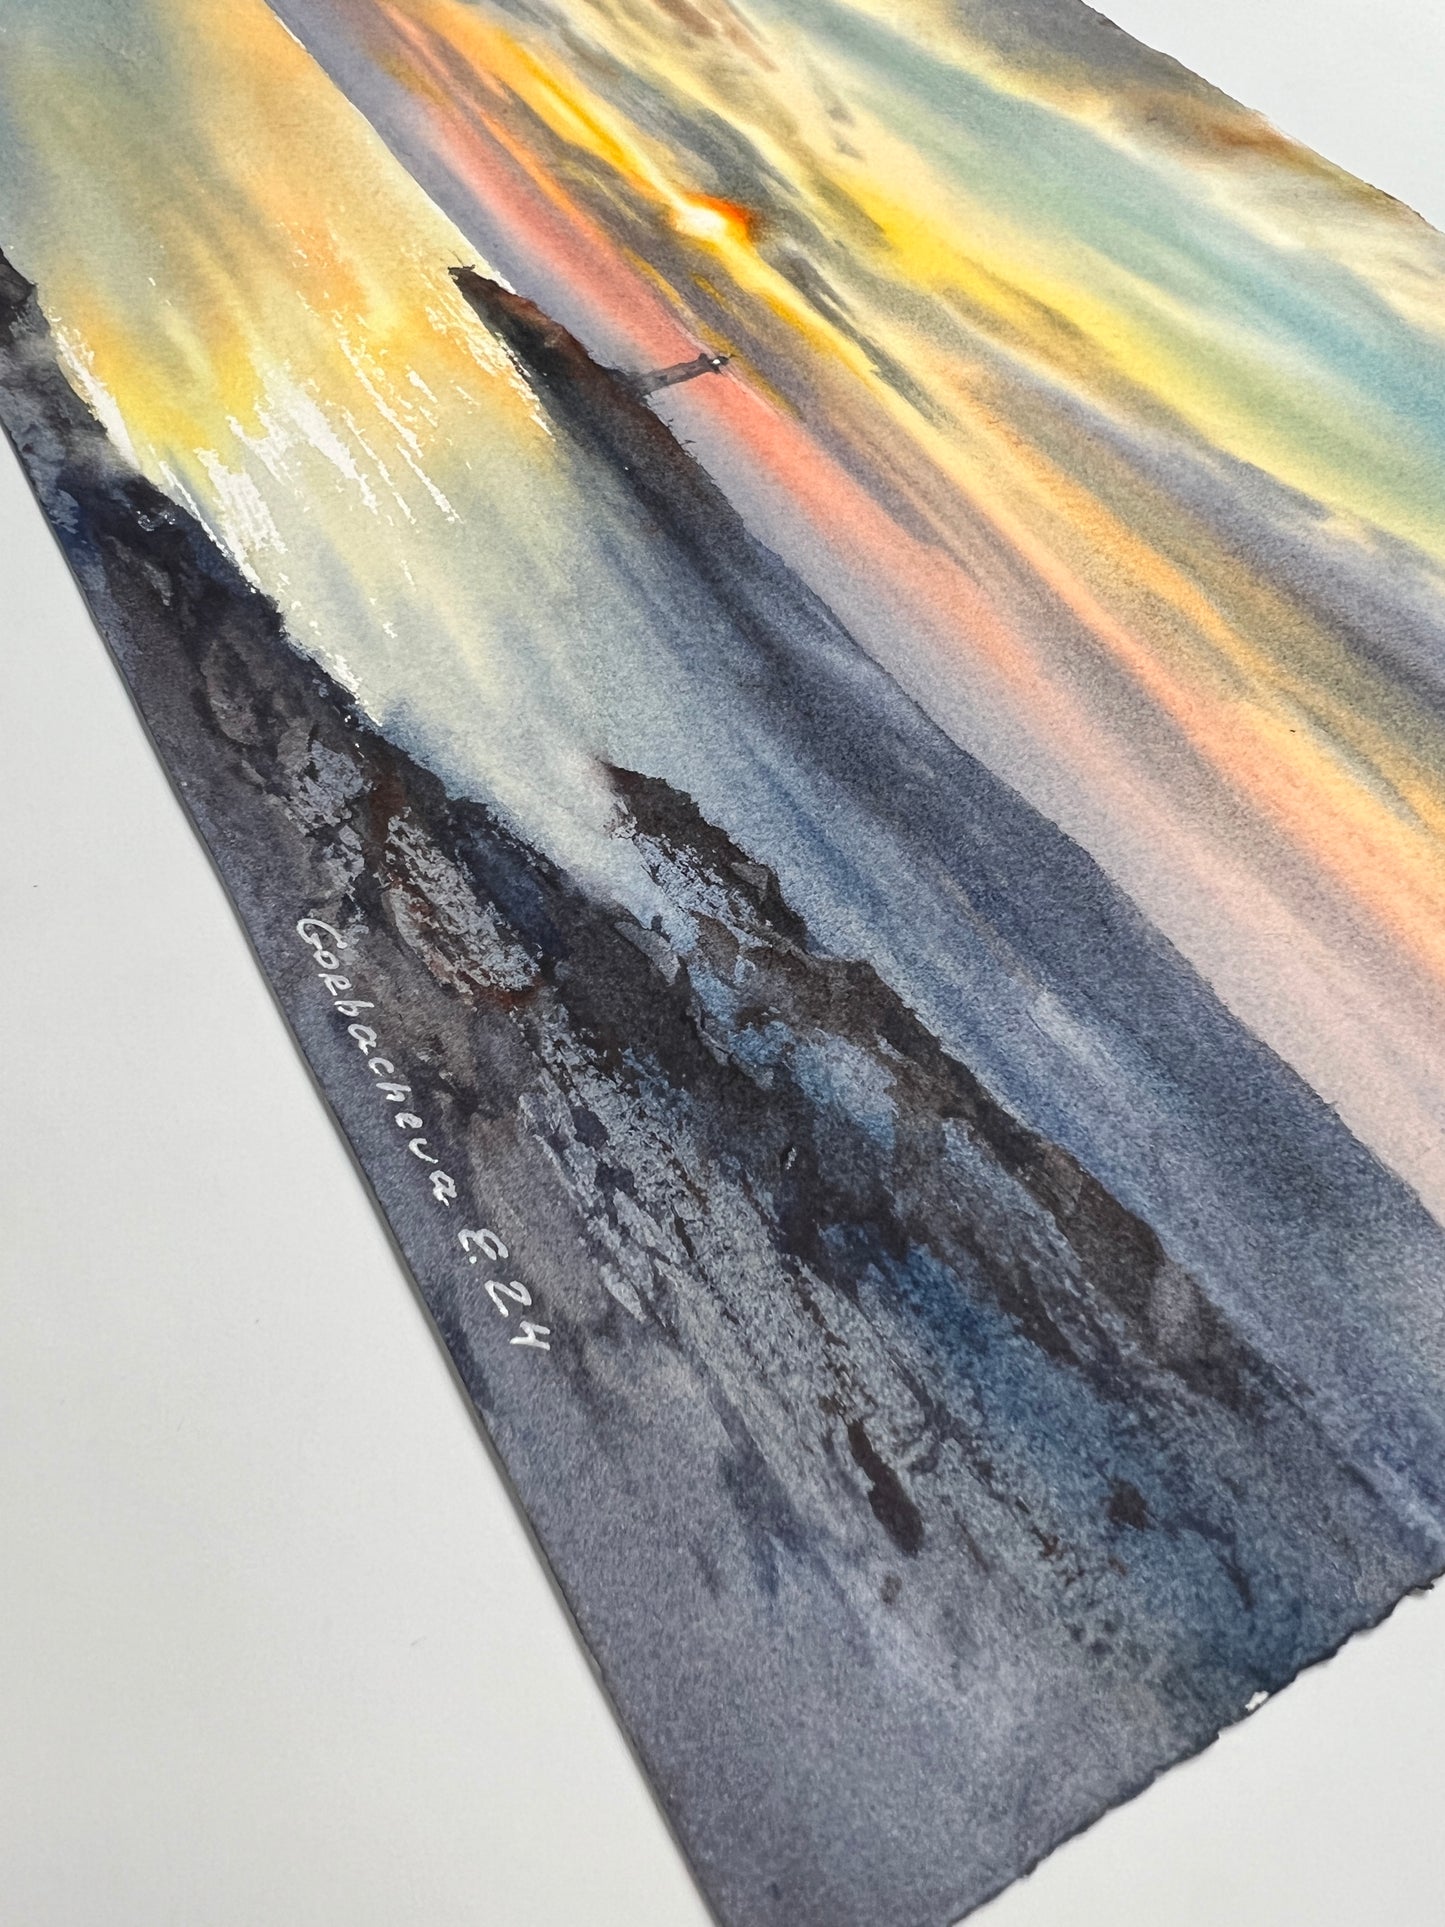 Coastal Lighthouse Painting Watercolour Original, Seascape Sunrise Art - Lighthouse at sunset